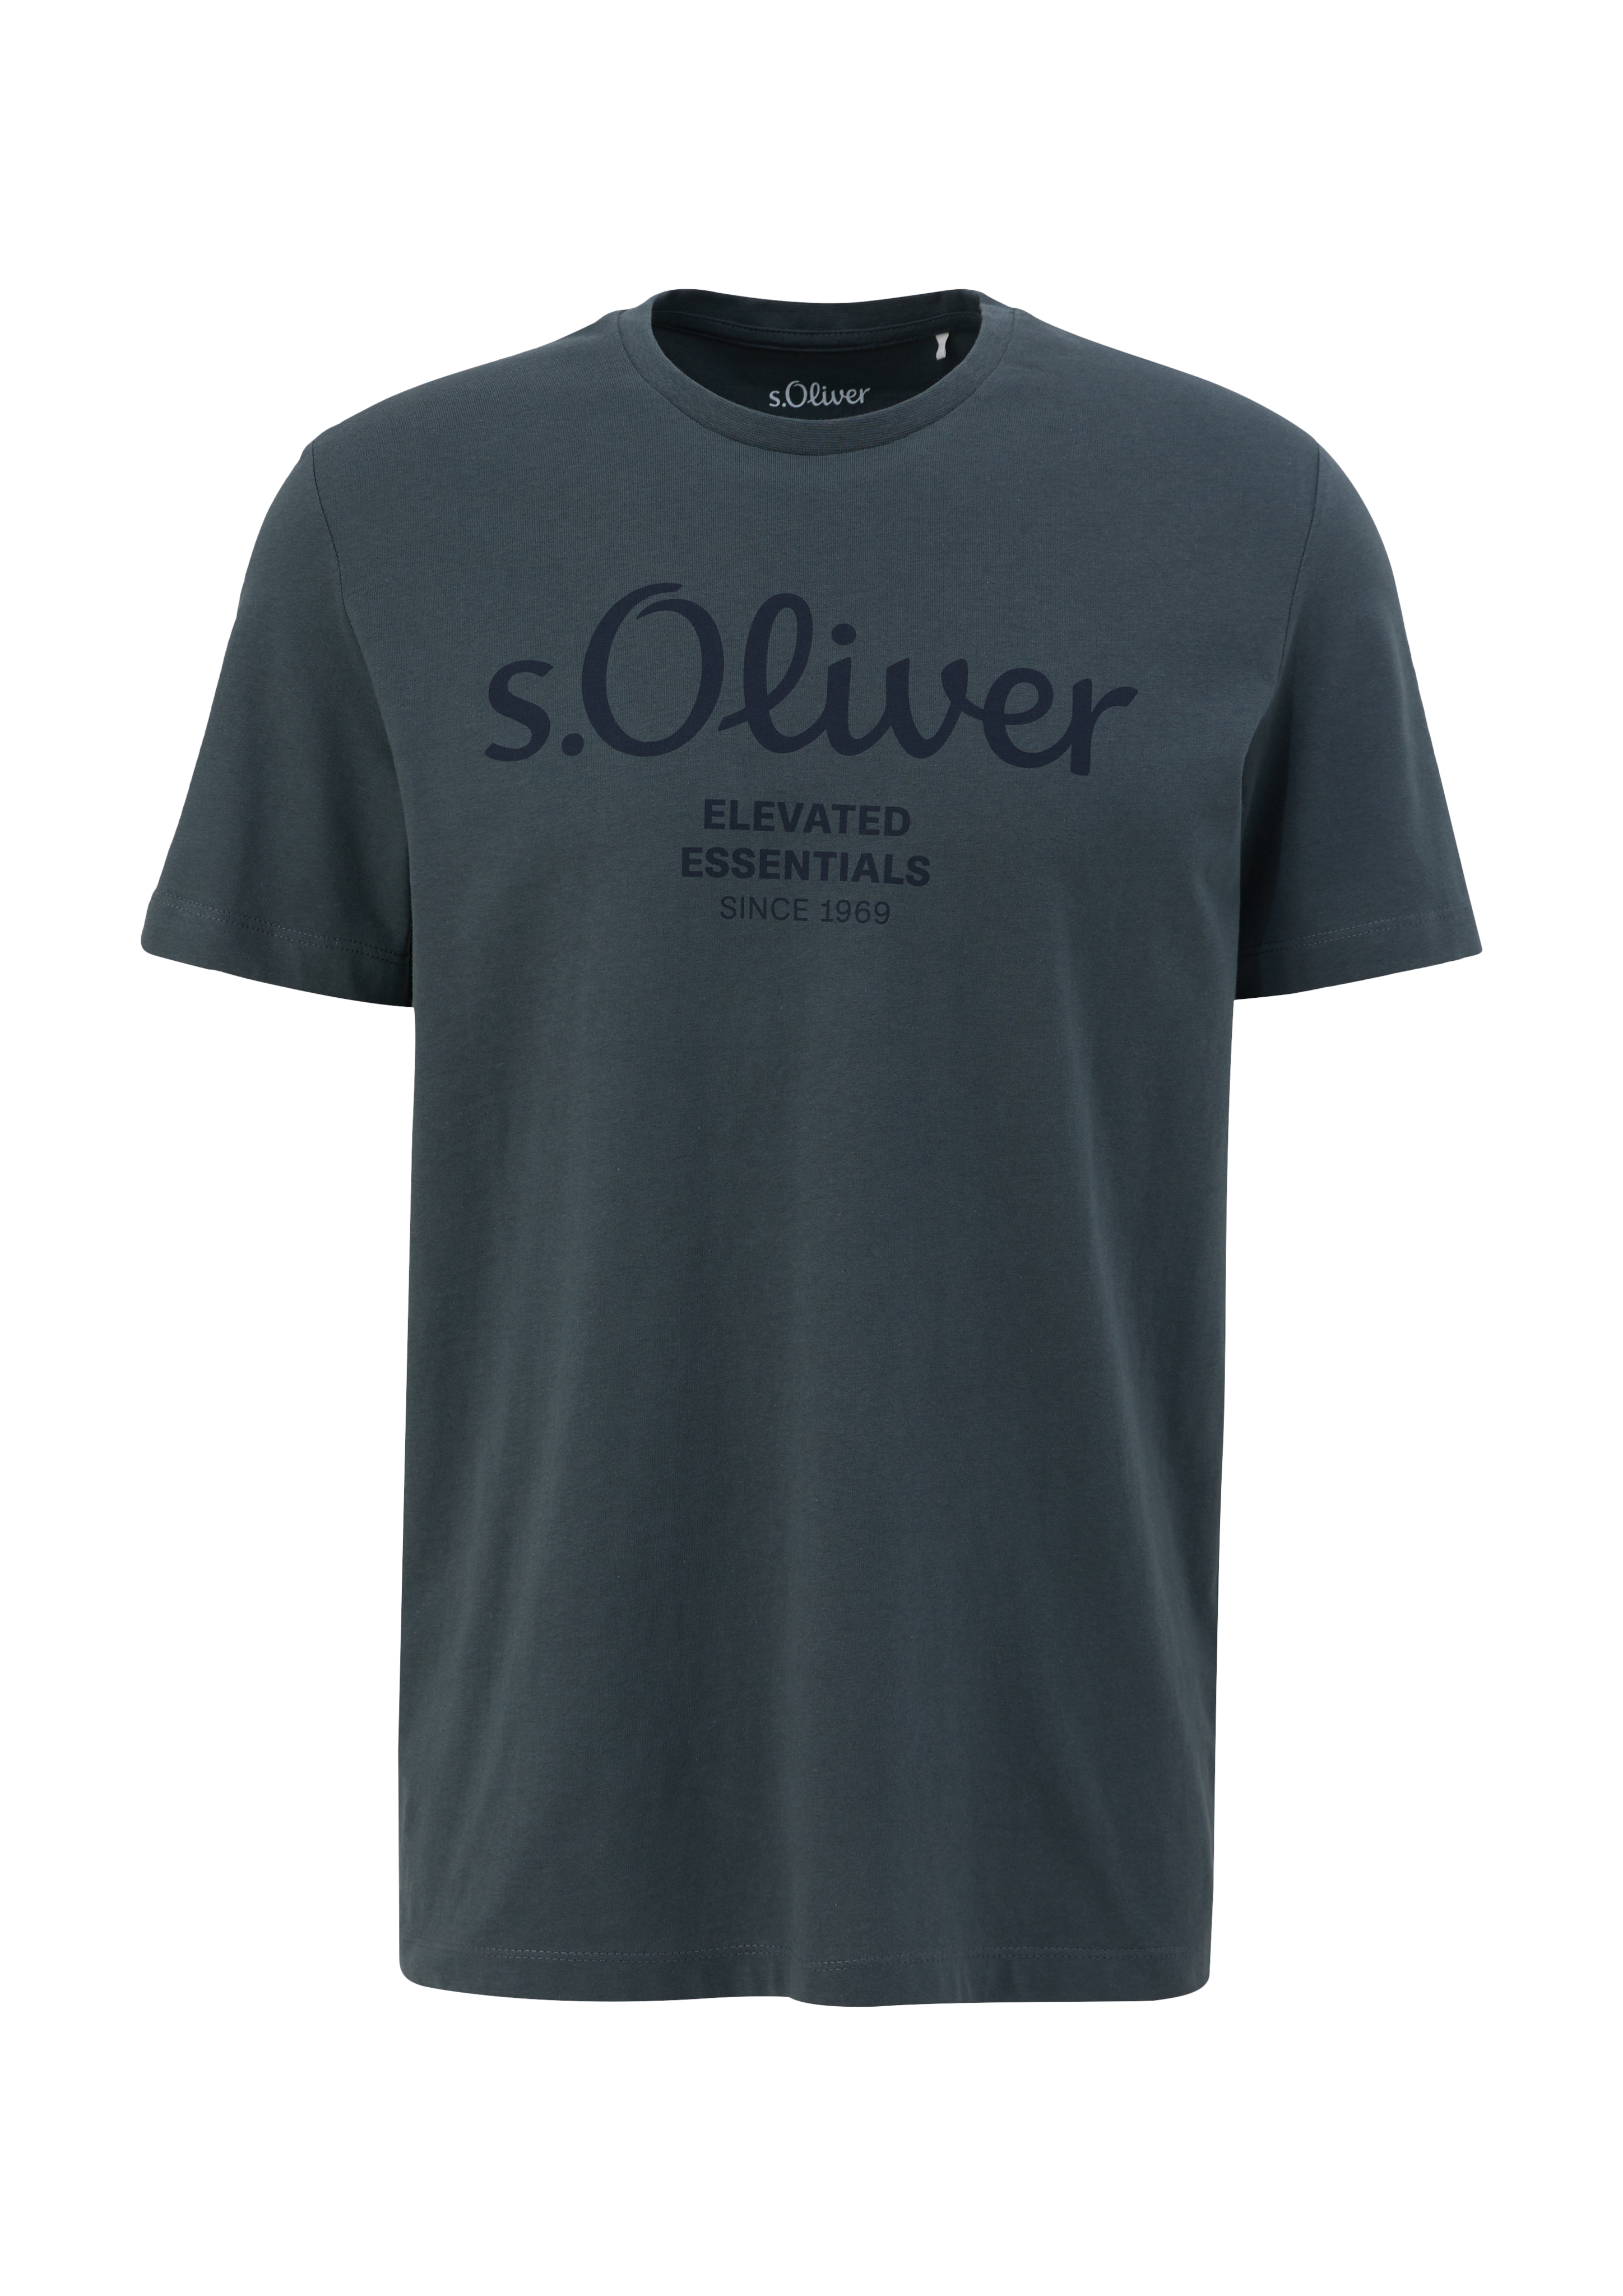 S. Oliver T-Shirt grey XXL place T-Shirt